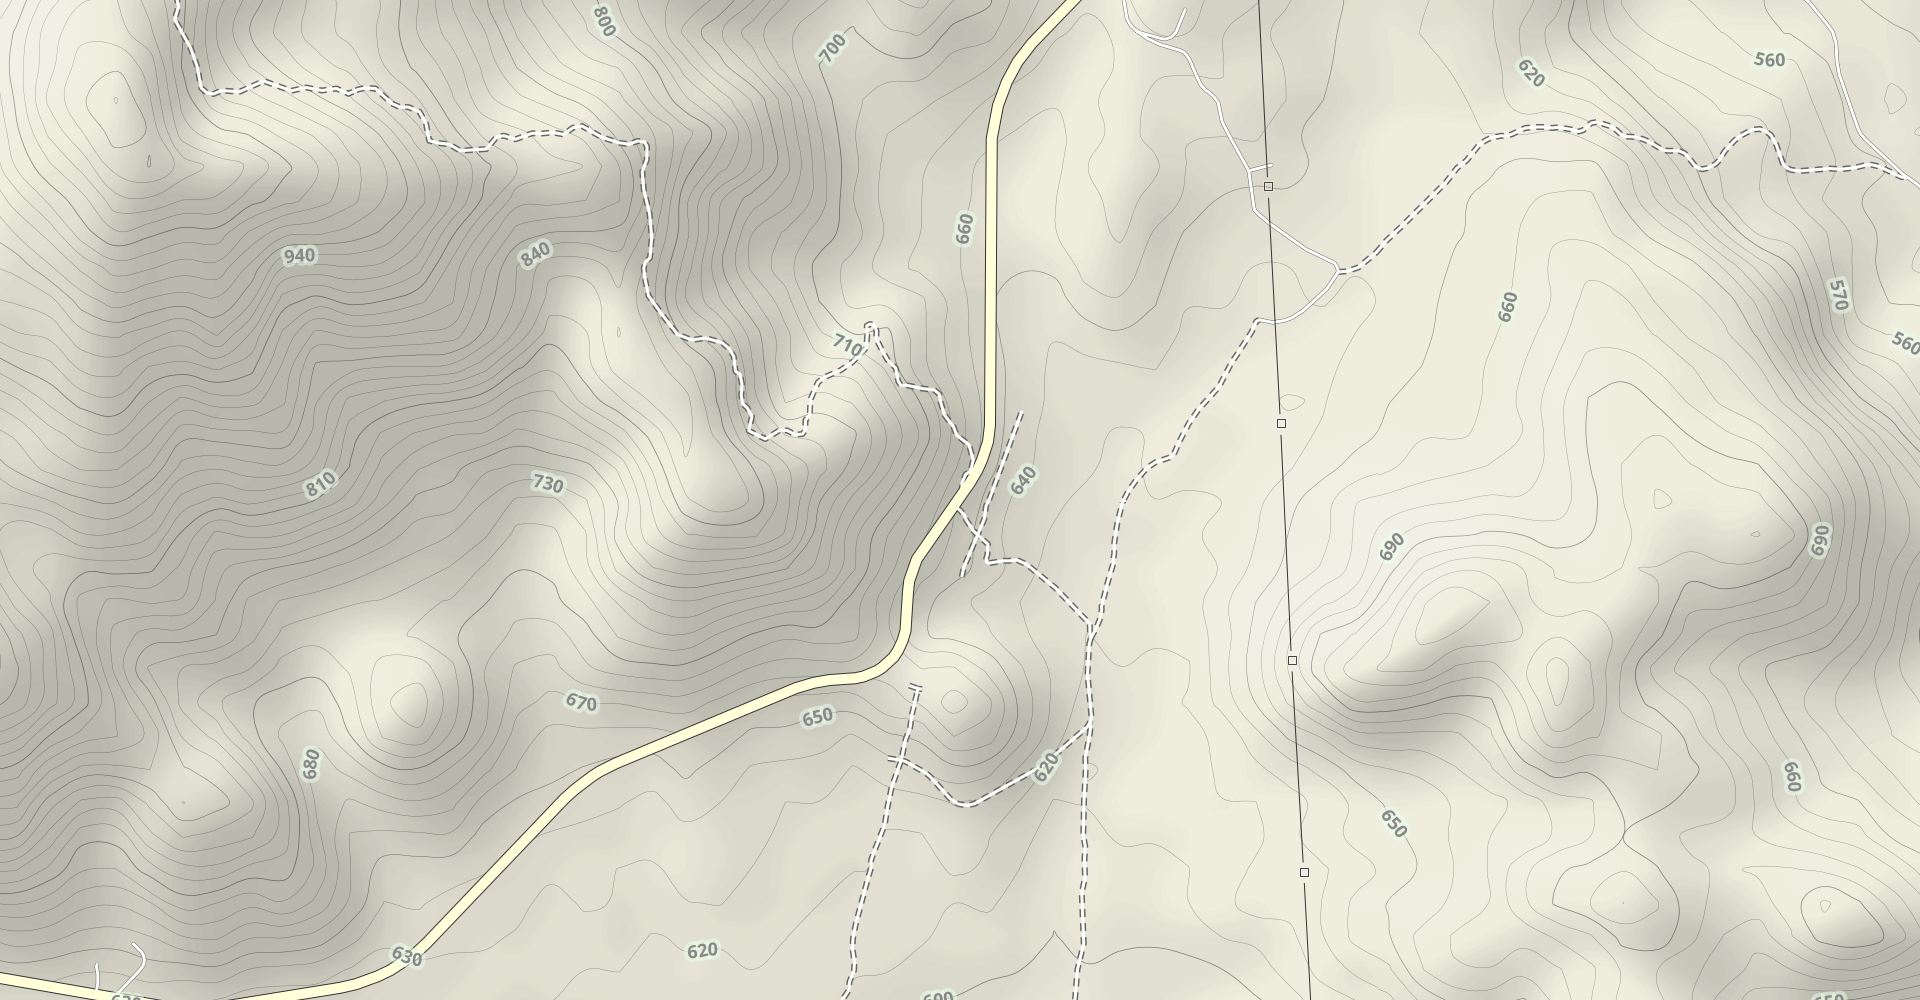 Lawson Peak Trail